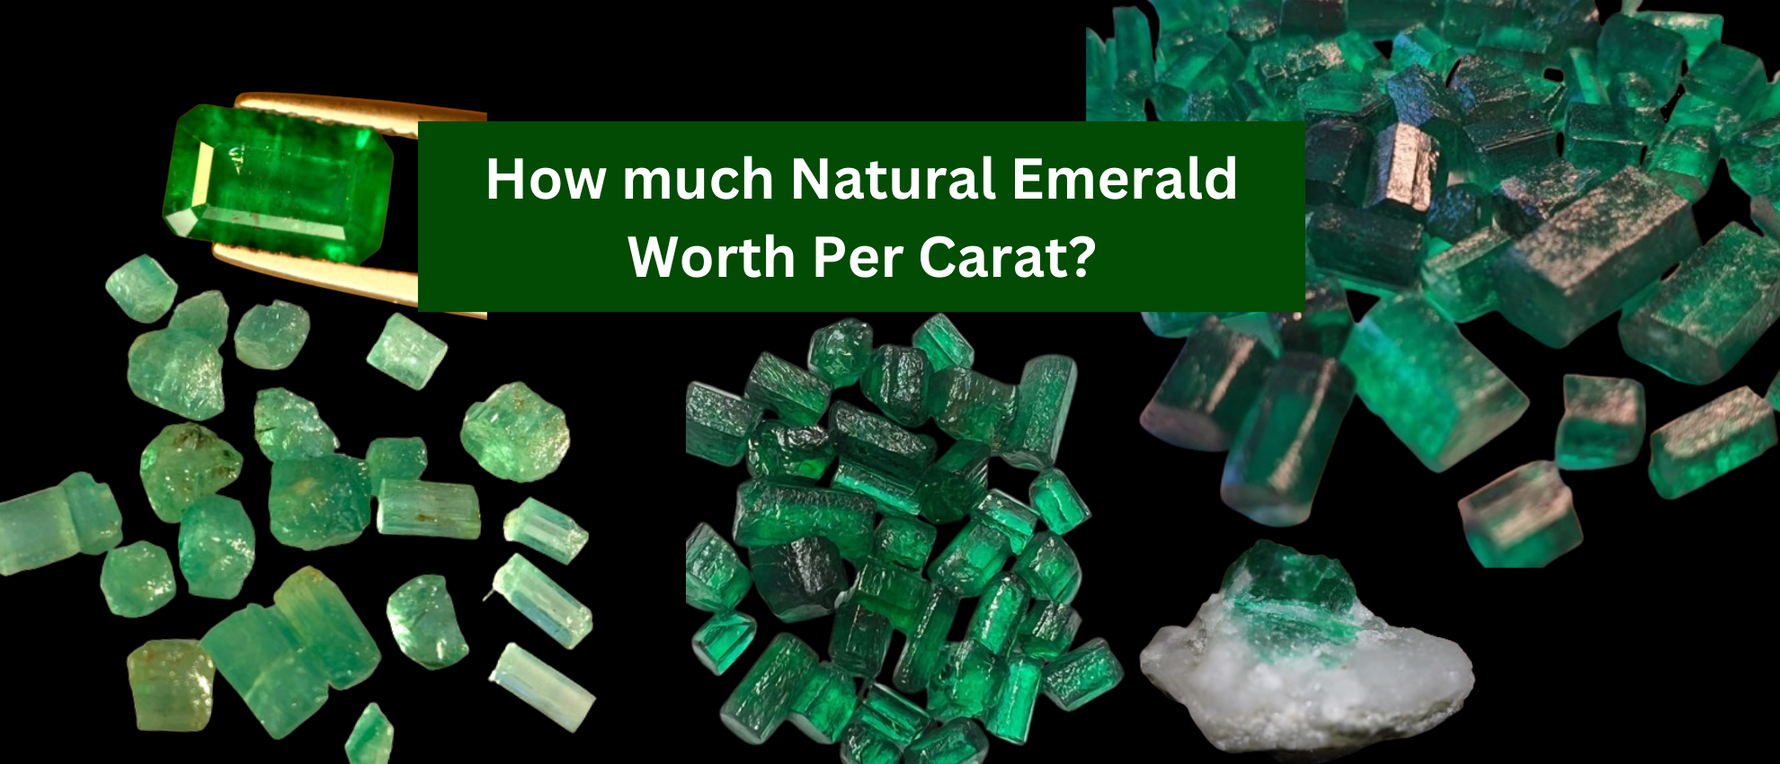 Natural Emerald Price per carat: Is Emerald an Expensive Gem?